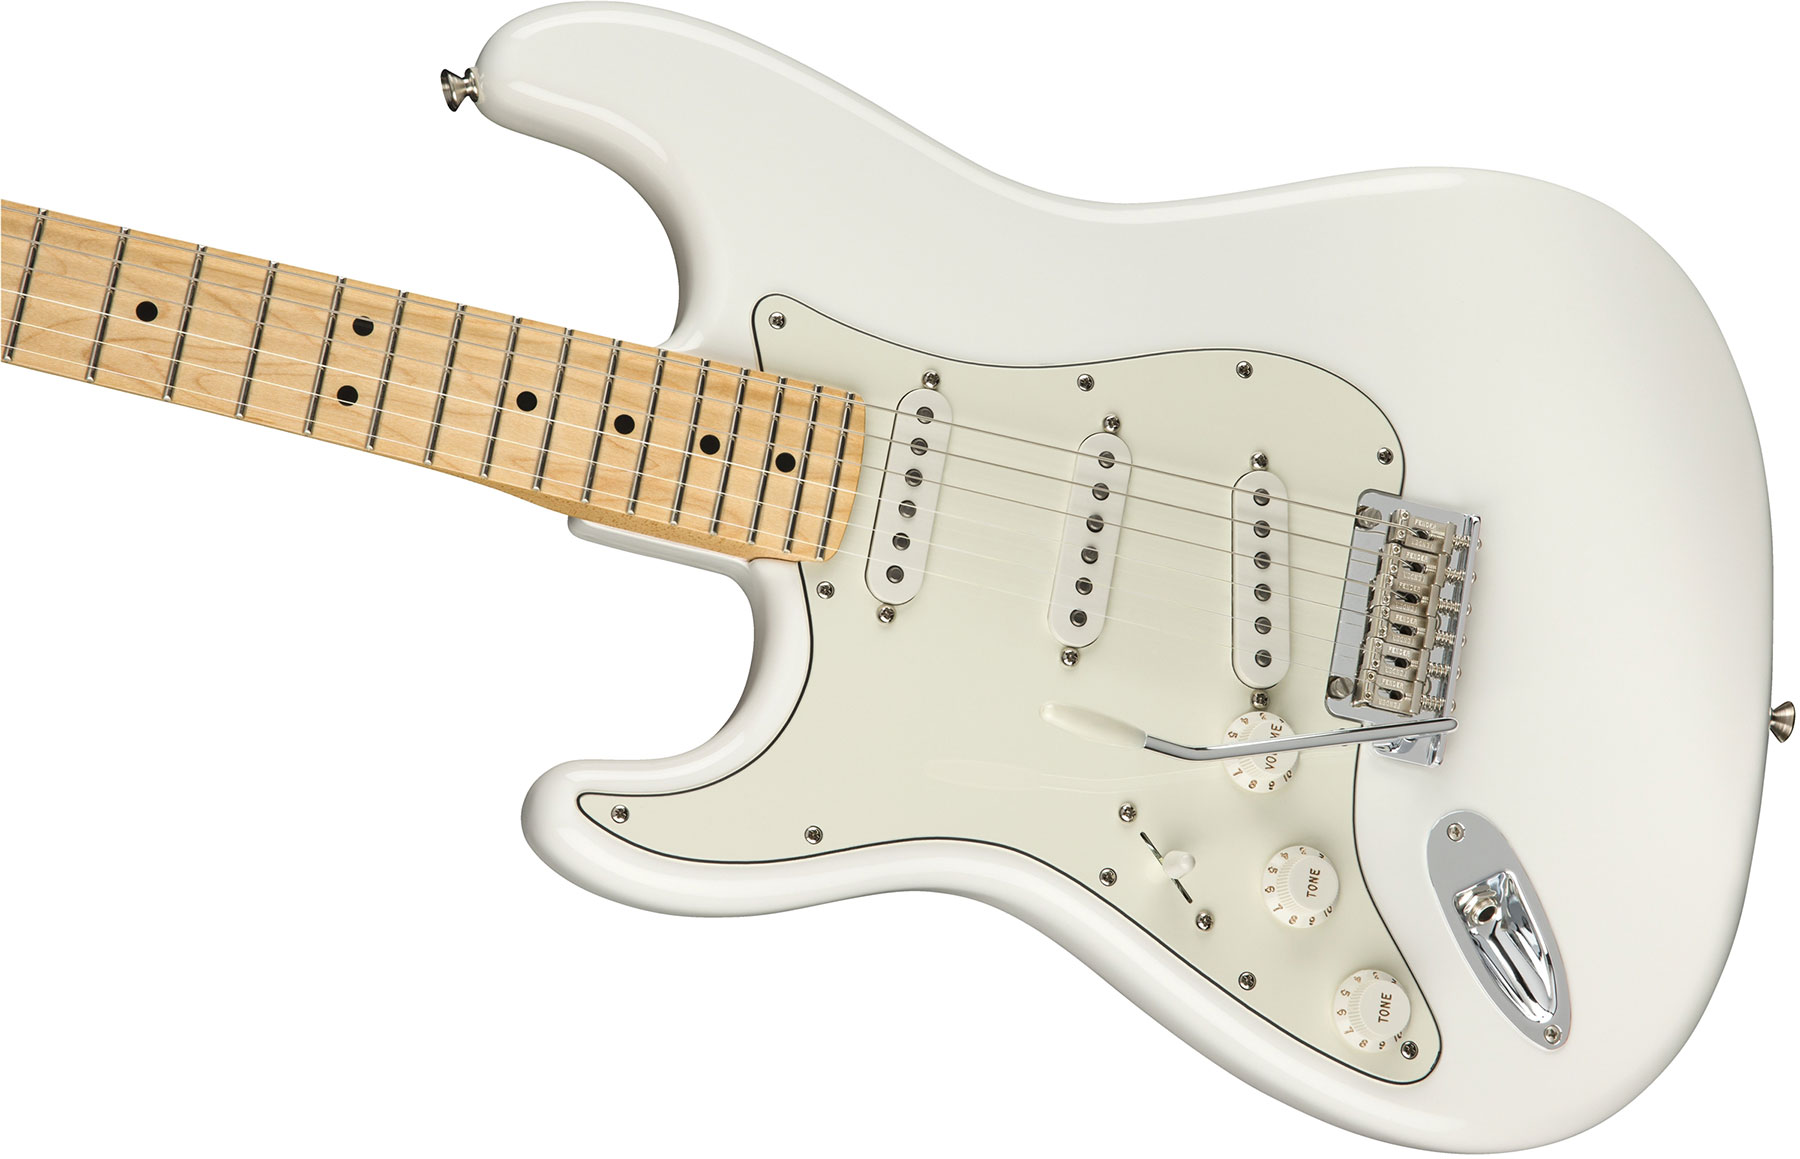 Fender Strat Player Lh Gaucher Mex Sss Mn - Polar White - Left-handed electric guitar - Variation 2